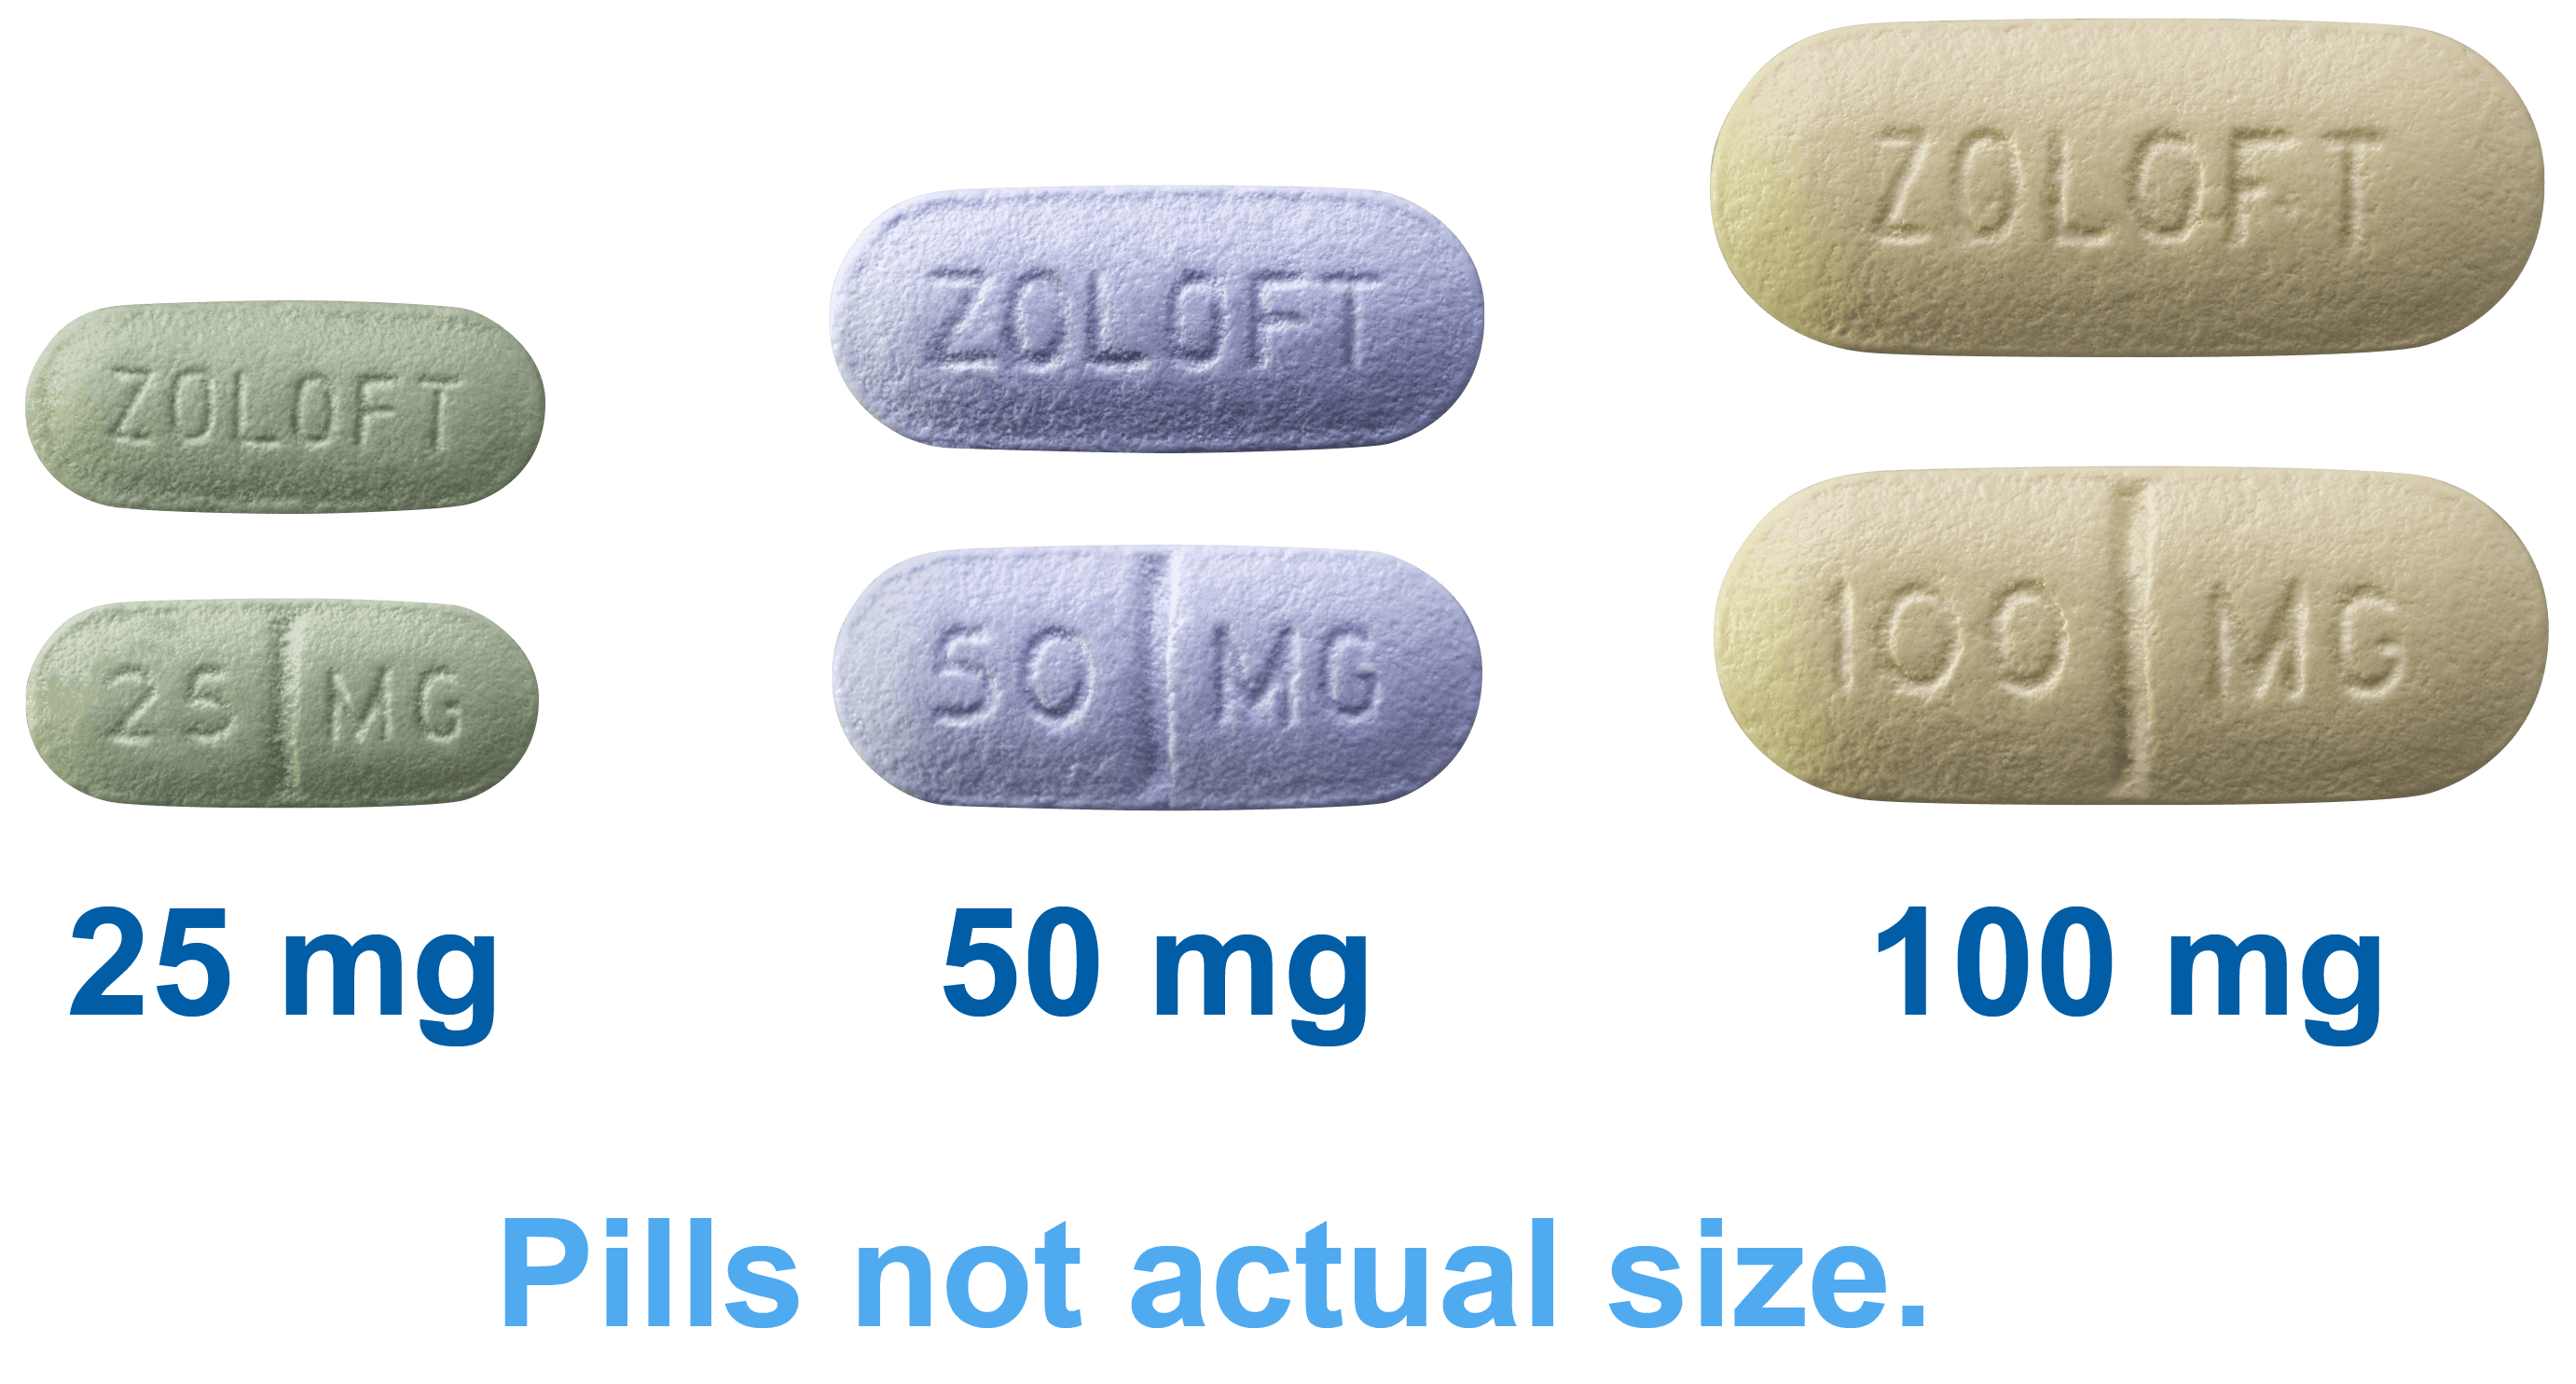 Images of 25 milligram, 50 milligram, and 100 milligram pills